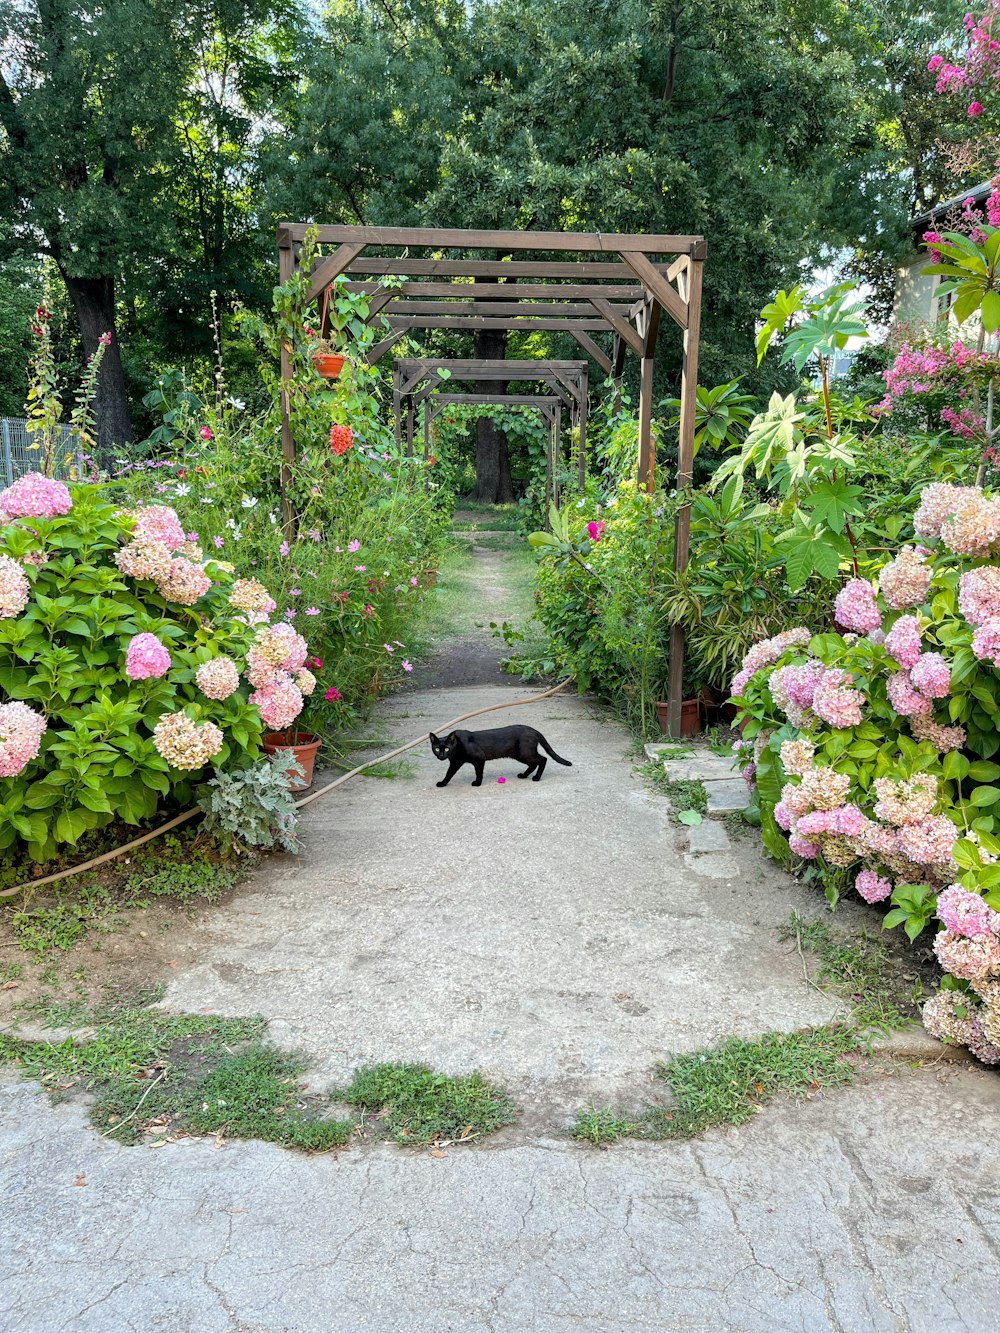 a black dog lying on a stone path in a garden